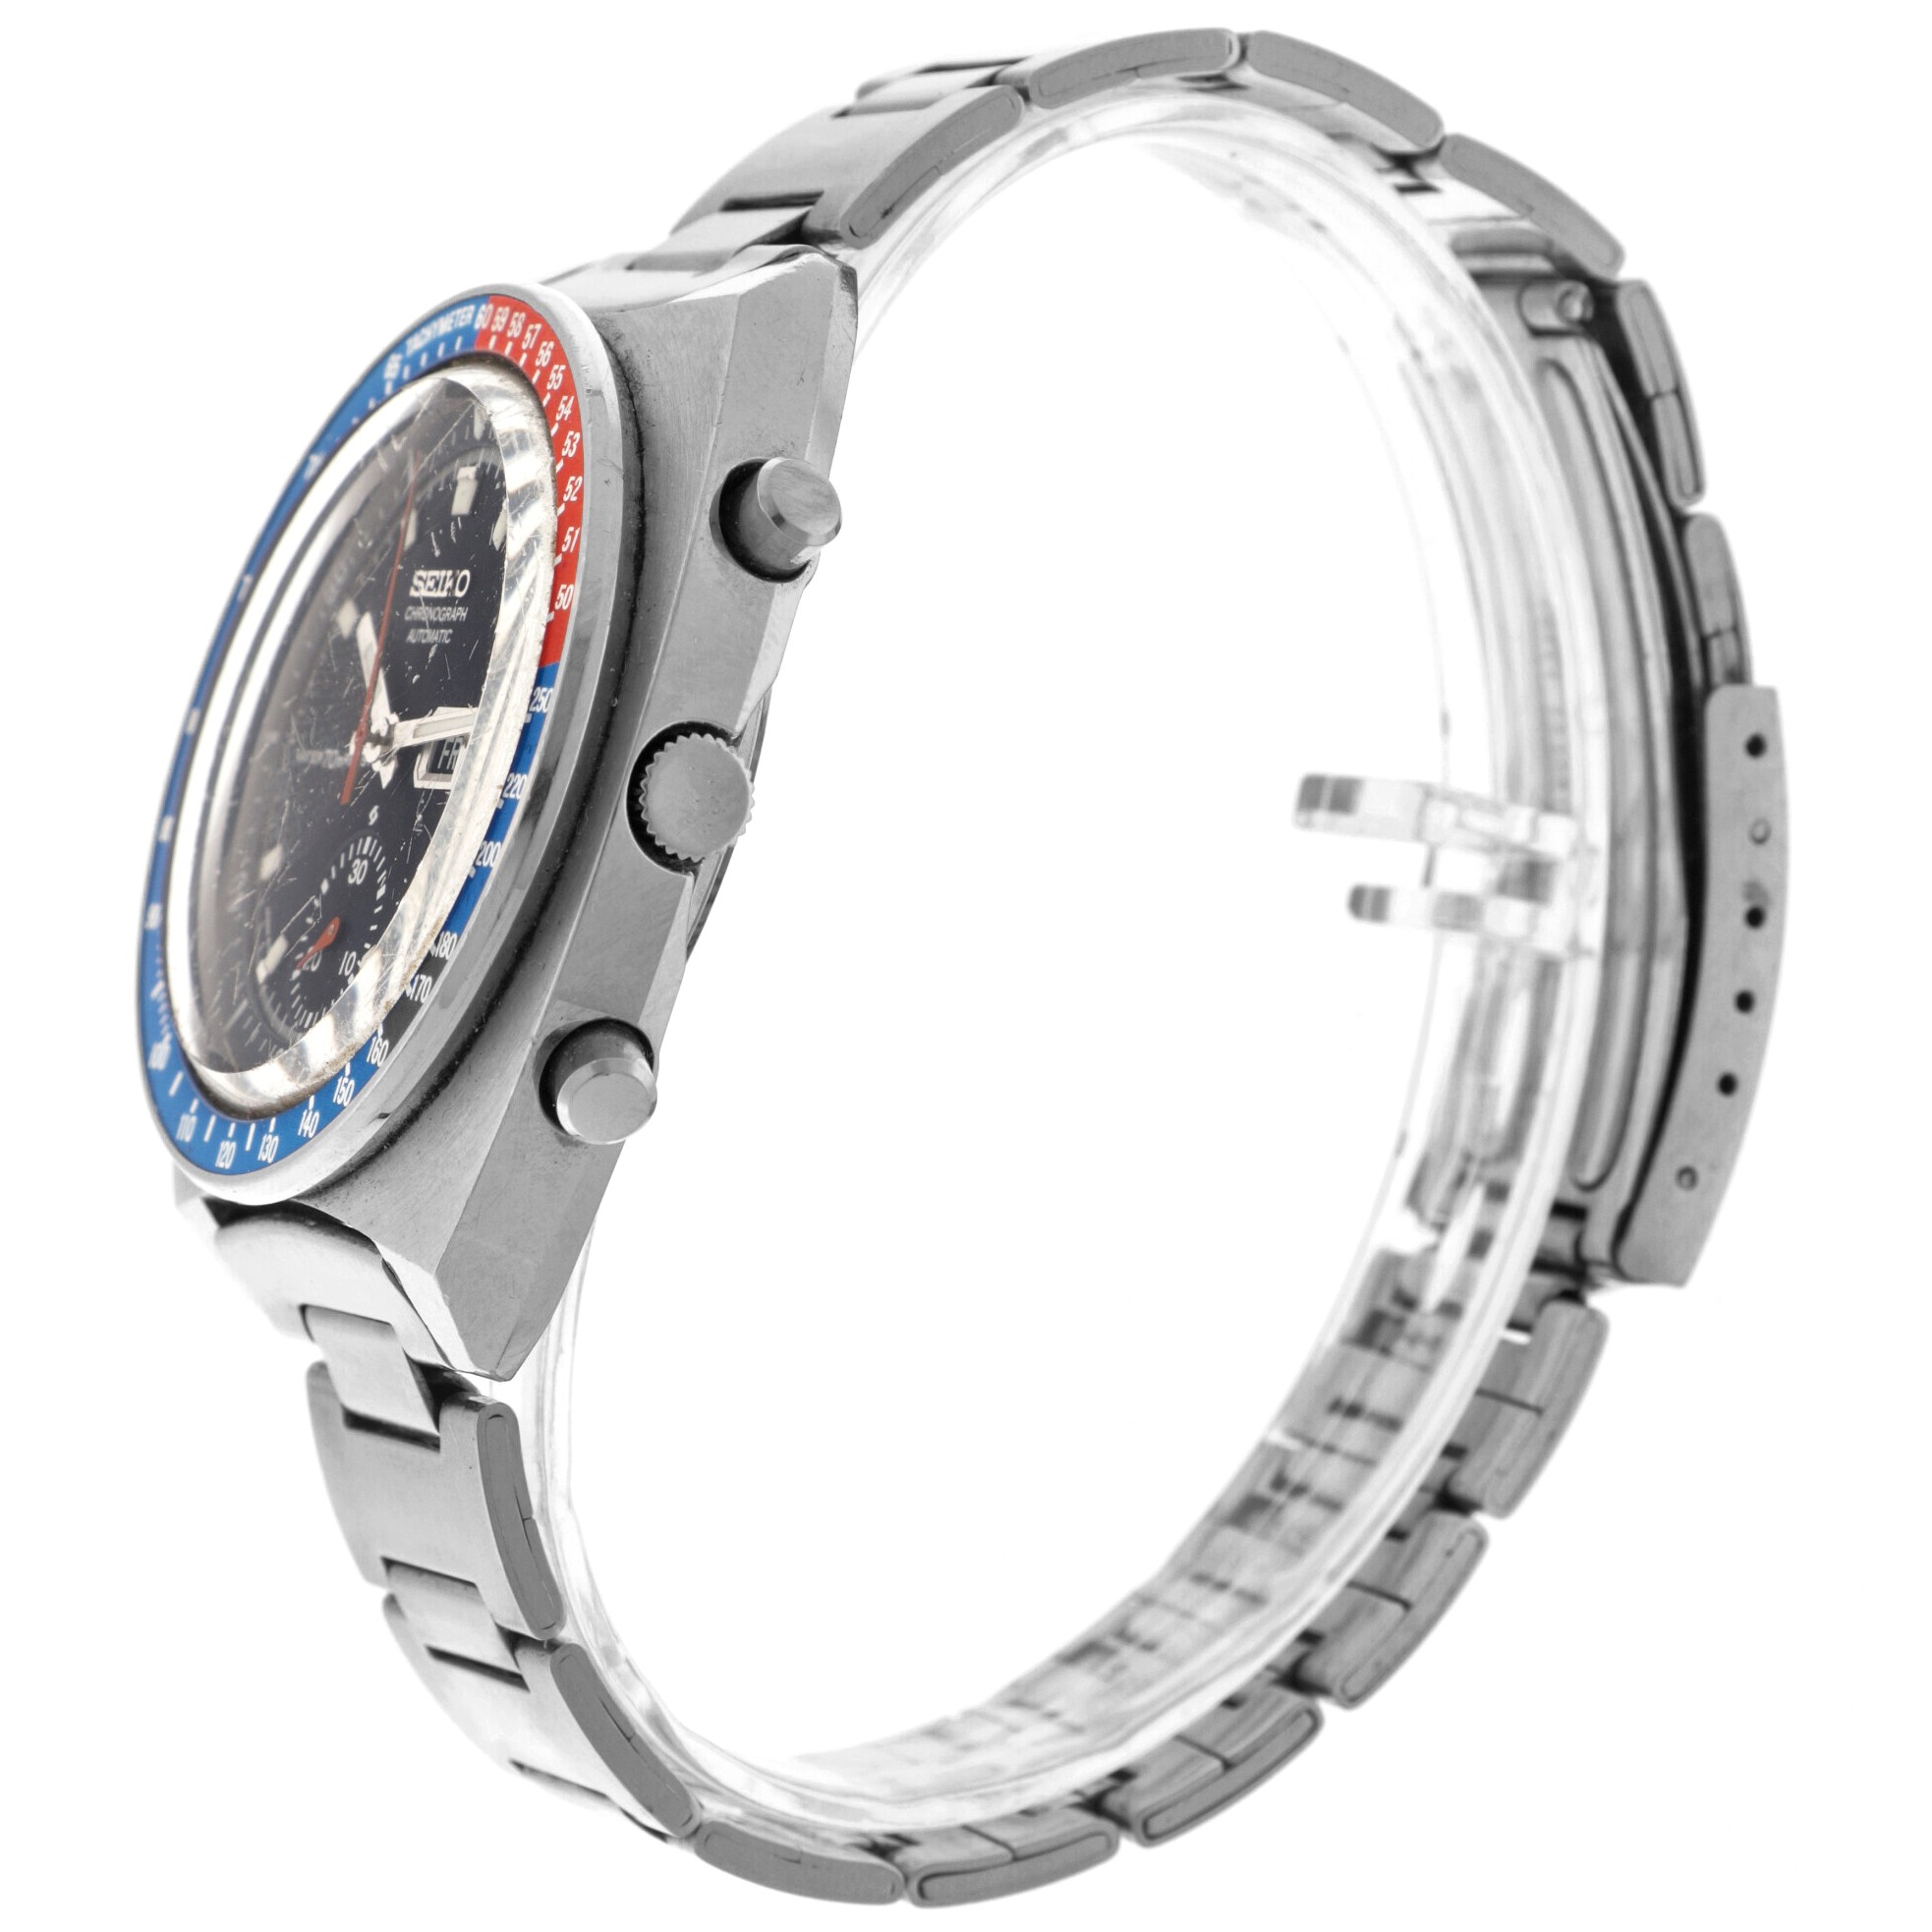 No Reserve - Seiko Pogue 'Pepsi' Chronograph Automatic 6139-6002 - Men's watch. - Image 5 of 6